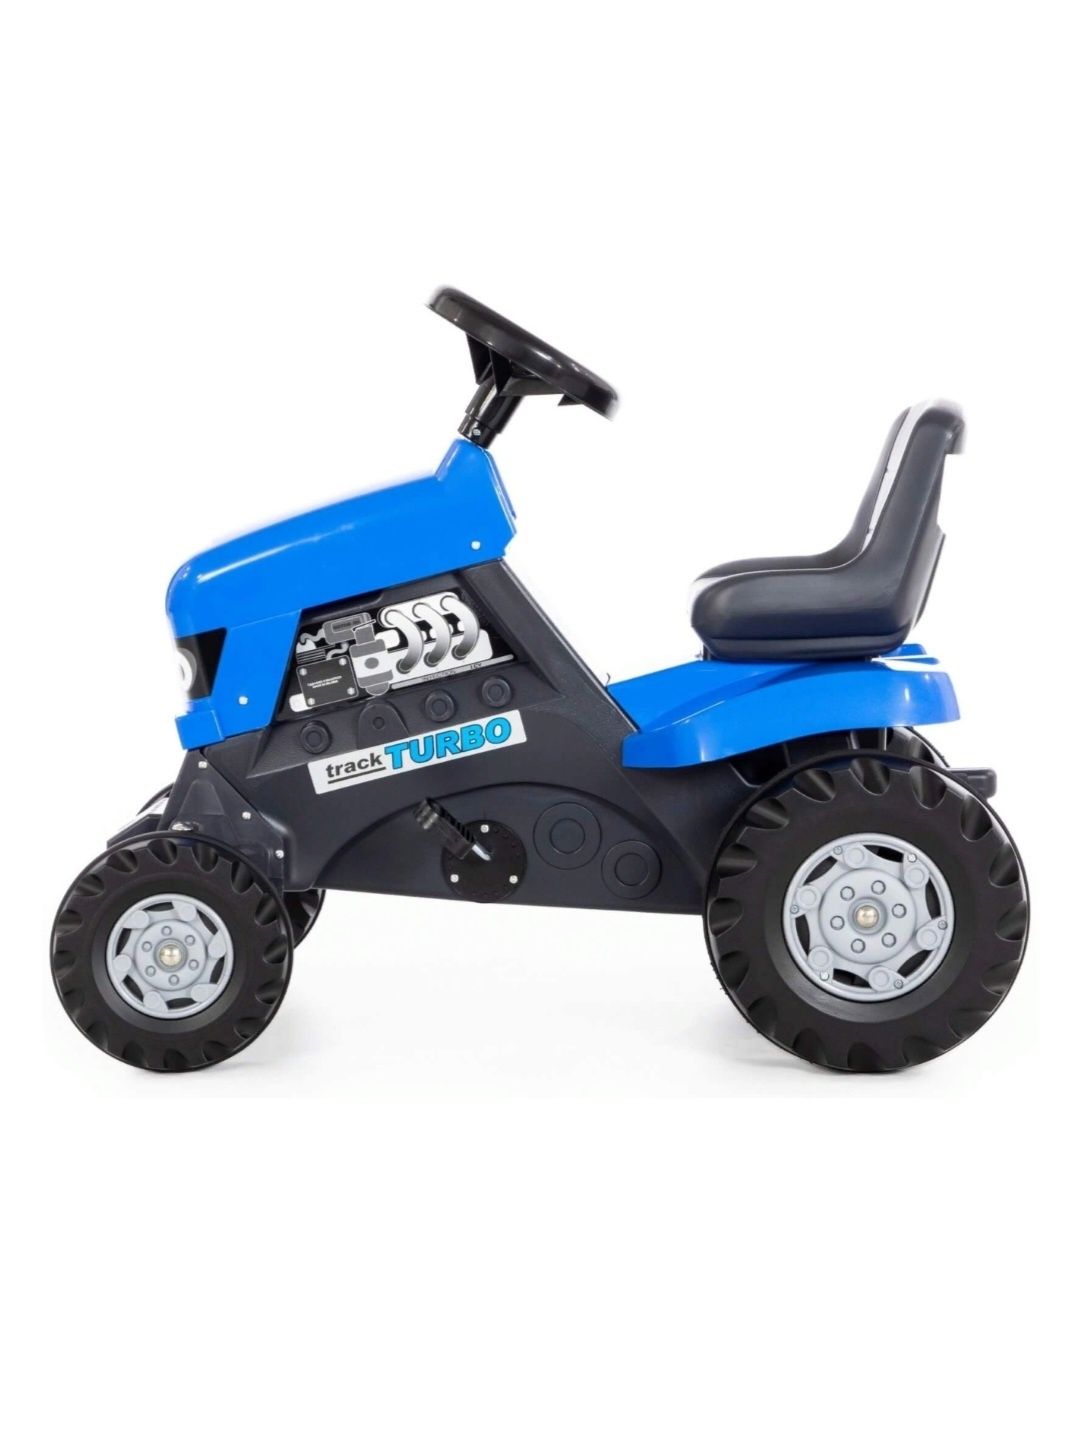 Синий трактор с педалями каталка машинки велосипед самакат ролики дети